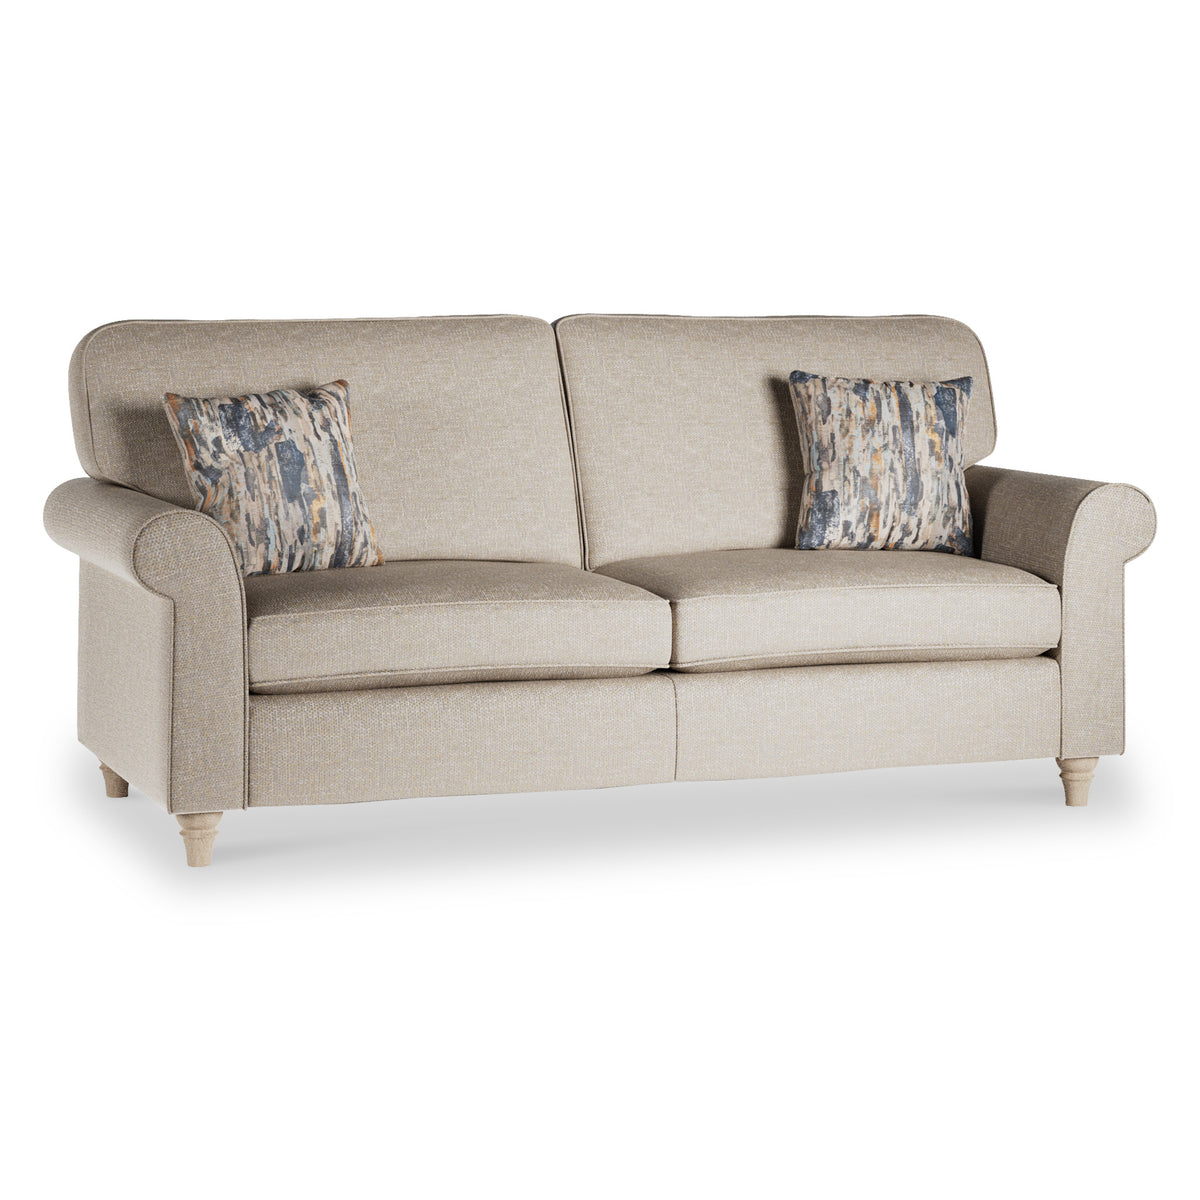 Jude Dijon 3 Seater Sofa from Roseland Furniture